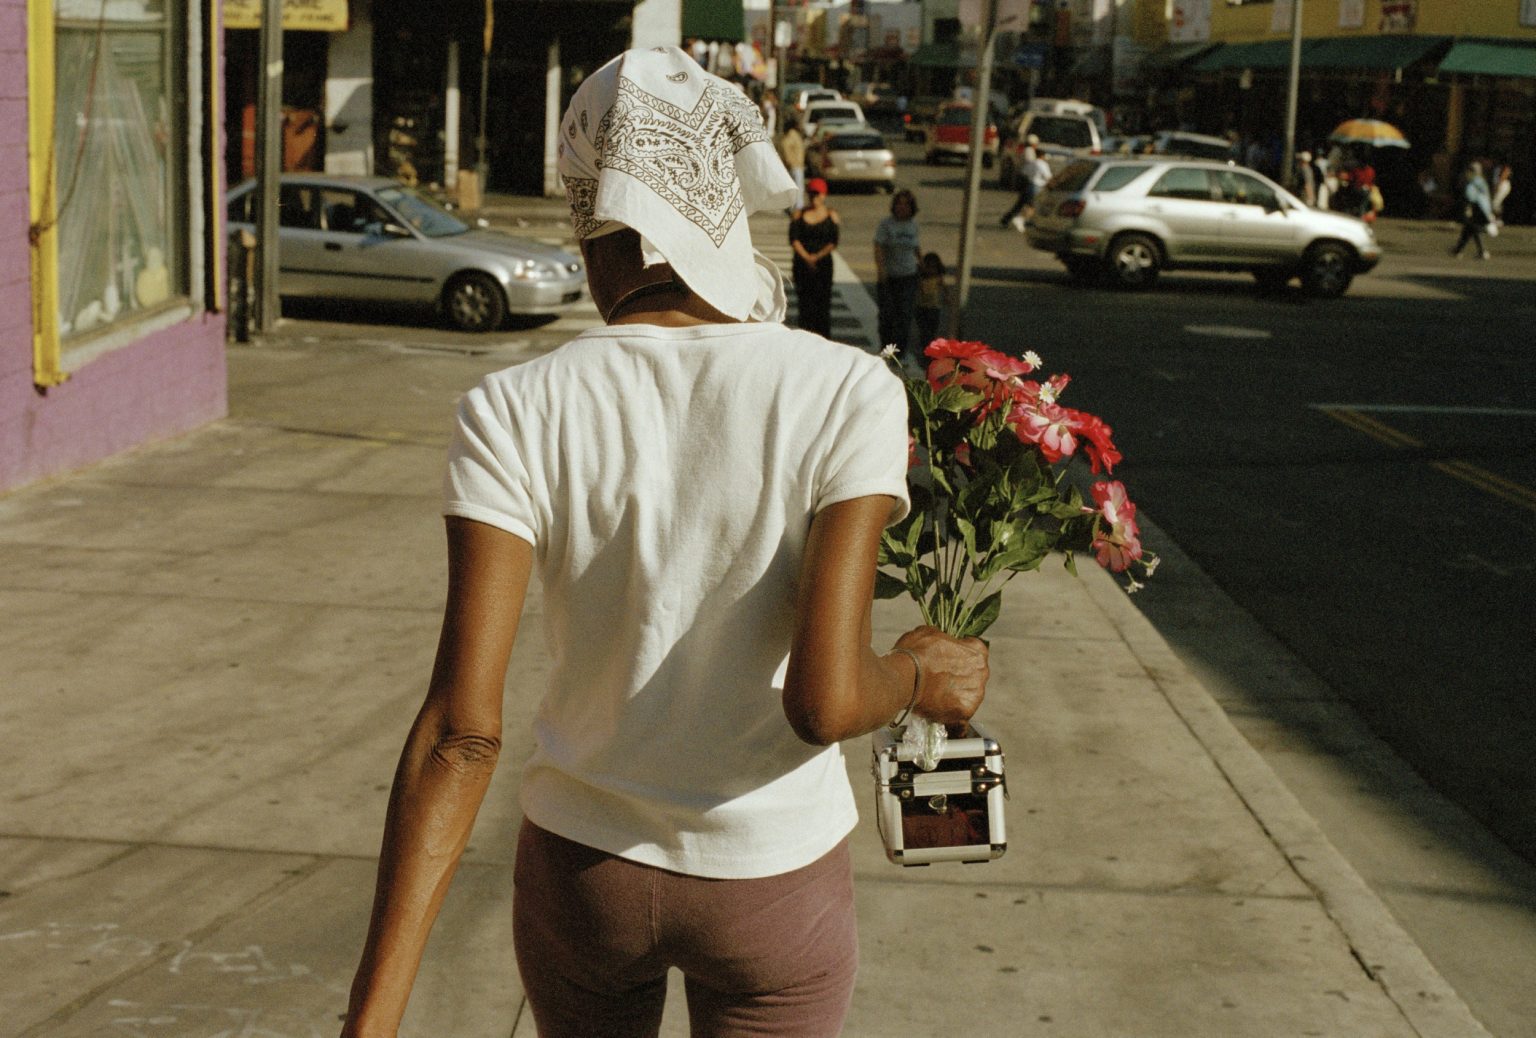 Los Angeles 2004 - Skid Row  - Shirley, prostitute

><
Los Angeles 2004 - Skid Row  - Shirley, prostituta *** Local Caption *** 00216069